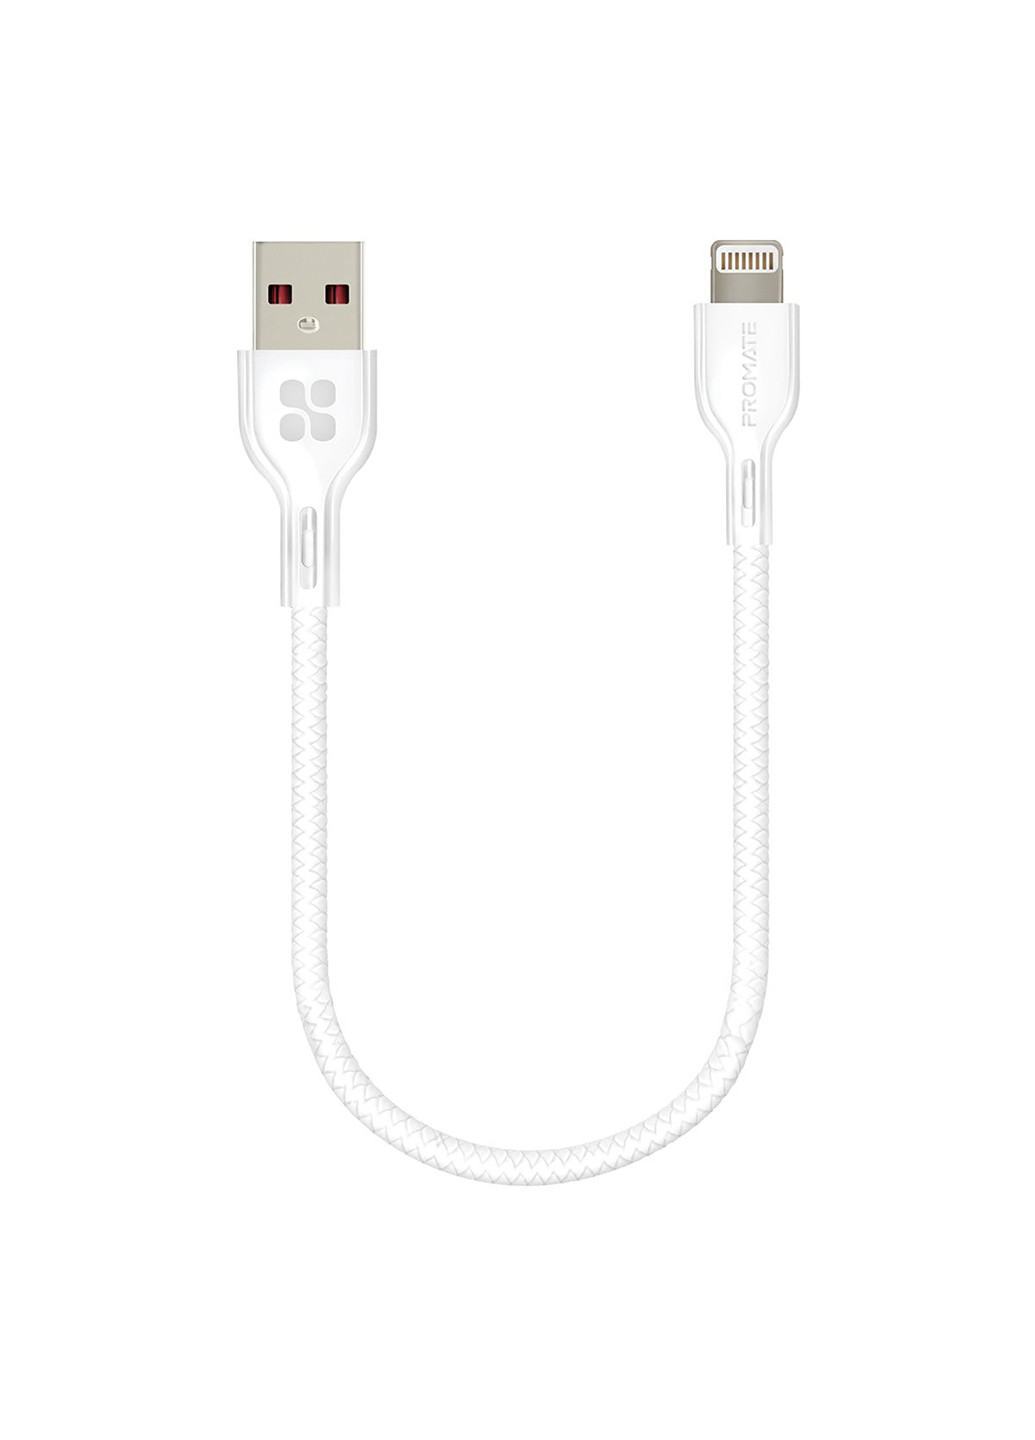 Кабель PowerBeam-25I USB-Lightning 0.25 м White Promate powerbeam-25i.white (188706466)